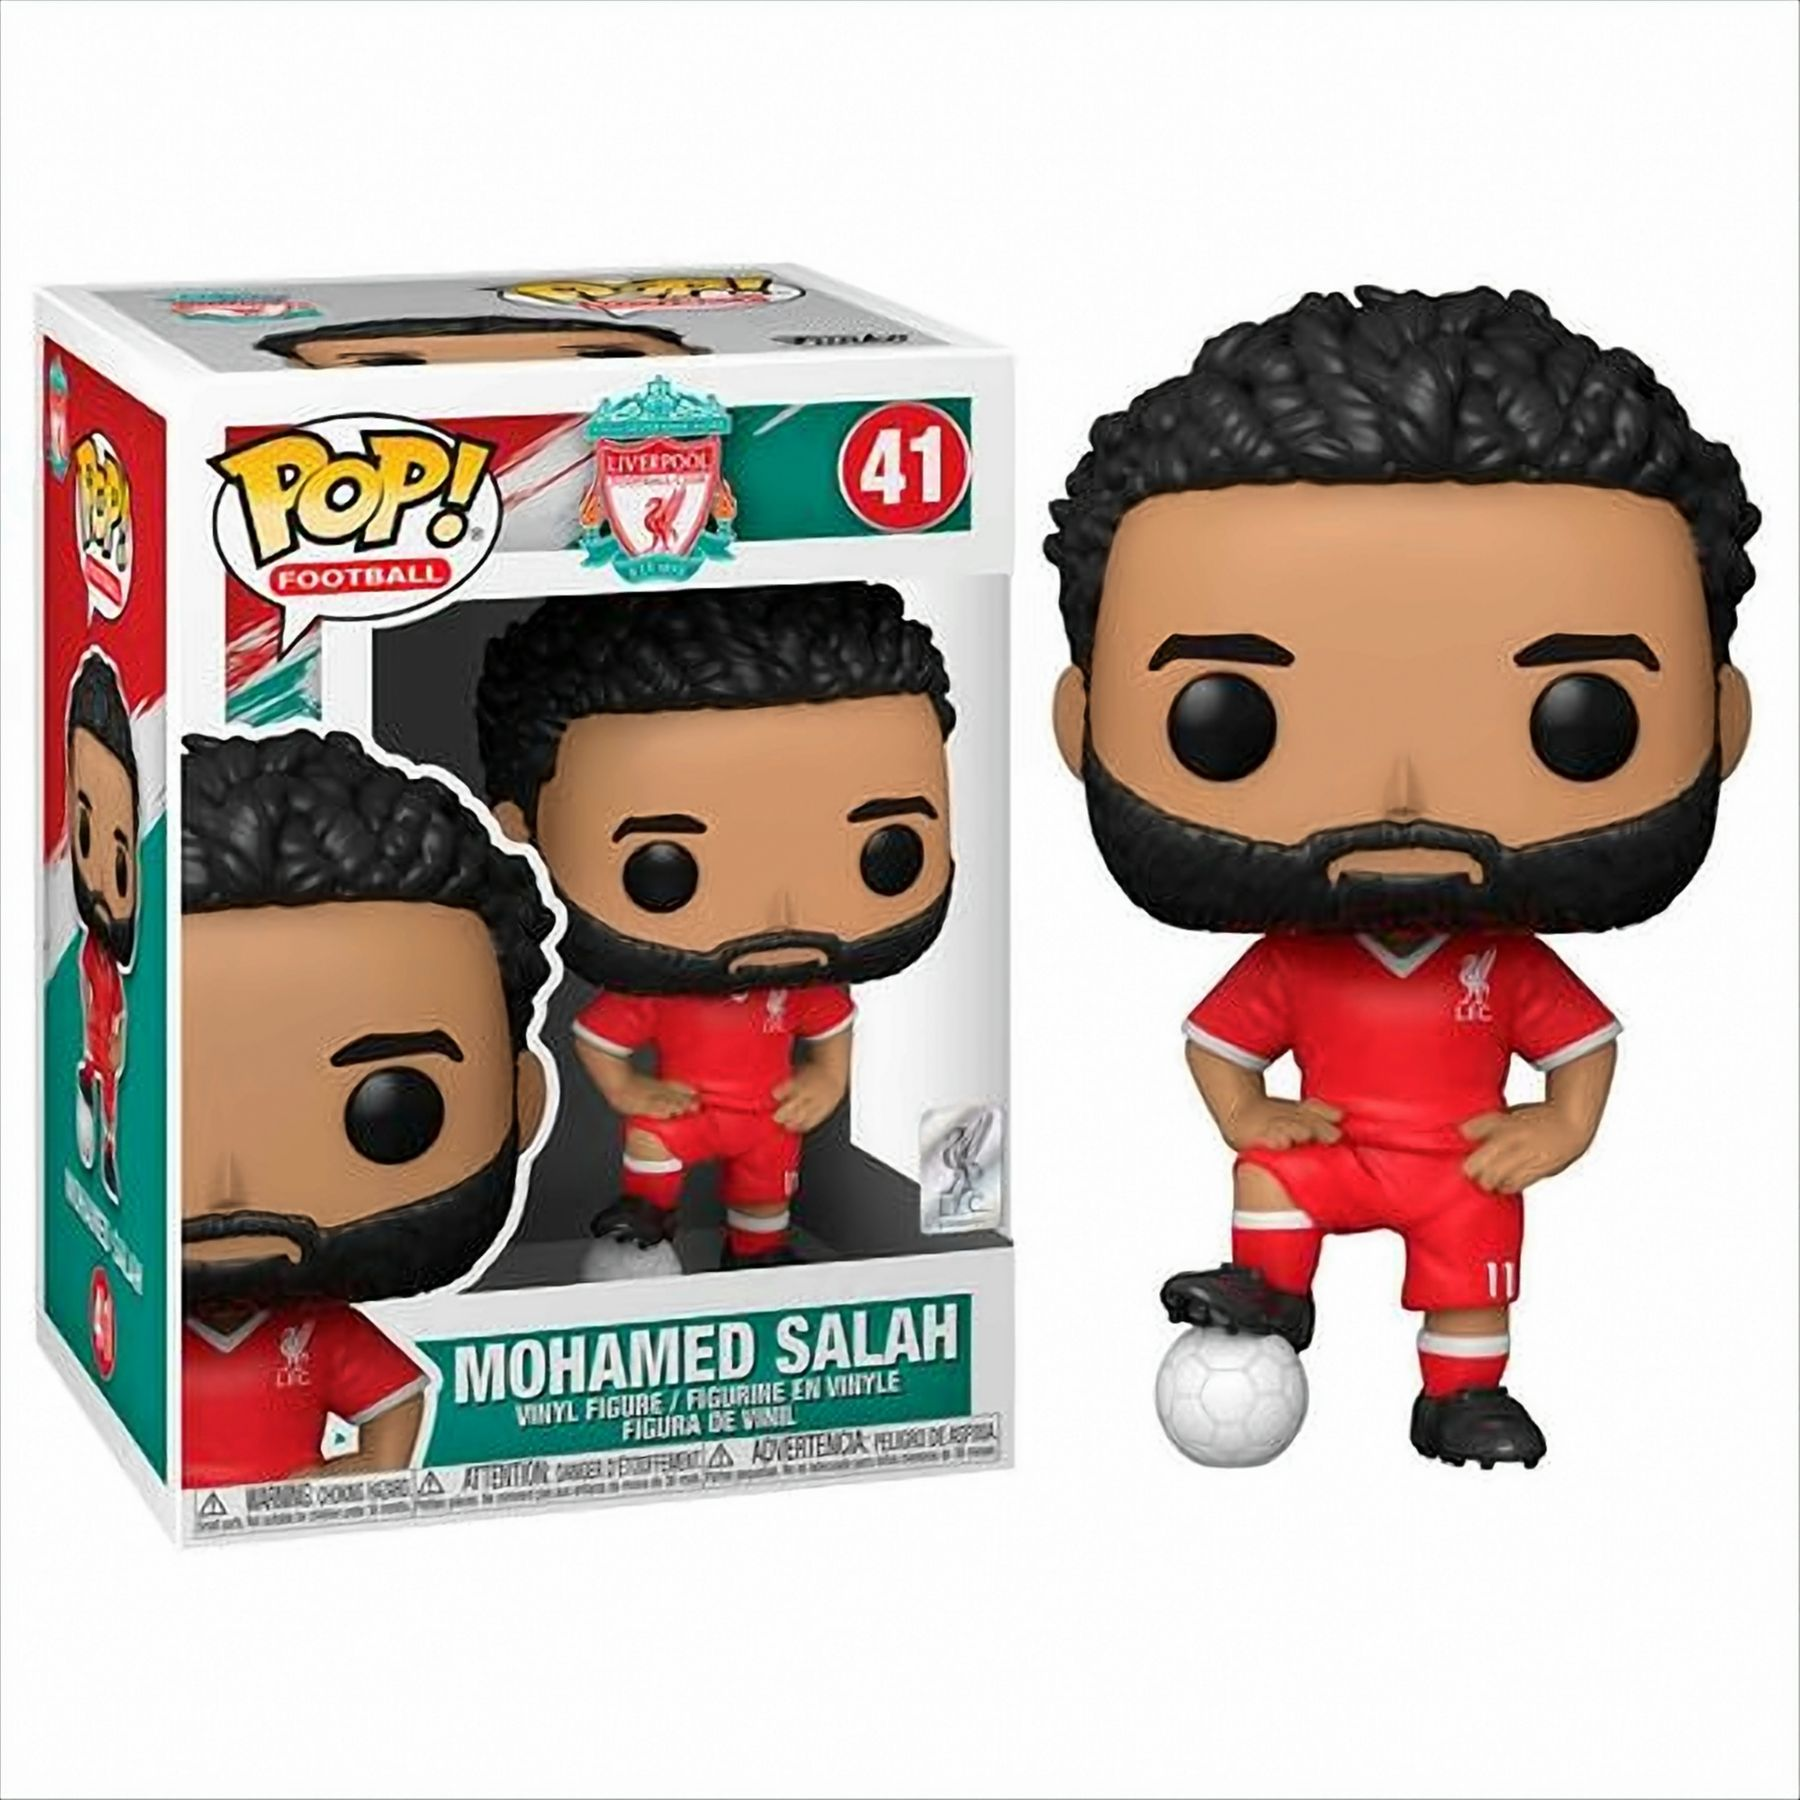 Salah - Fussball - Mohamed FC Liverpool / POP